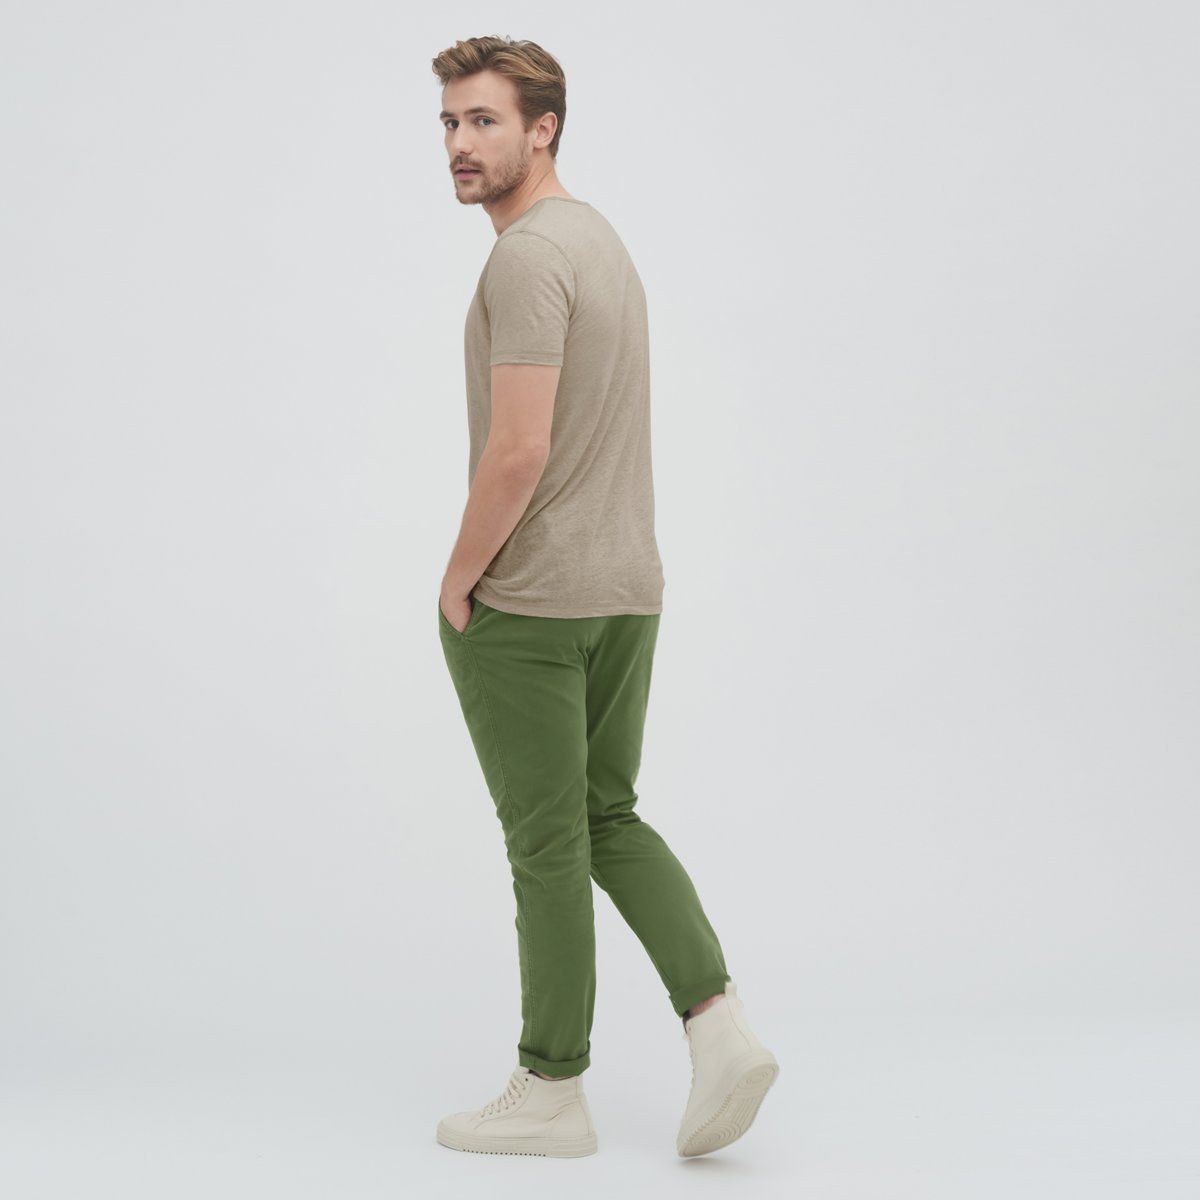 Linen Natural für CRAFTS Leinen-Stoff Tage T-Shirt LIVING Leichter ANDY warme